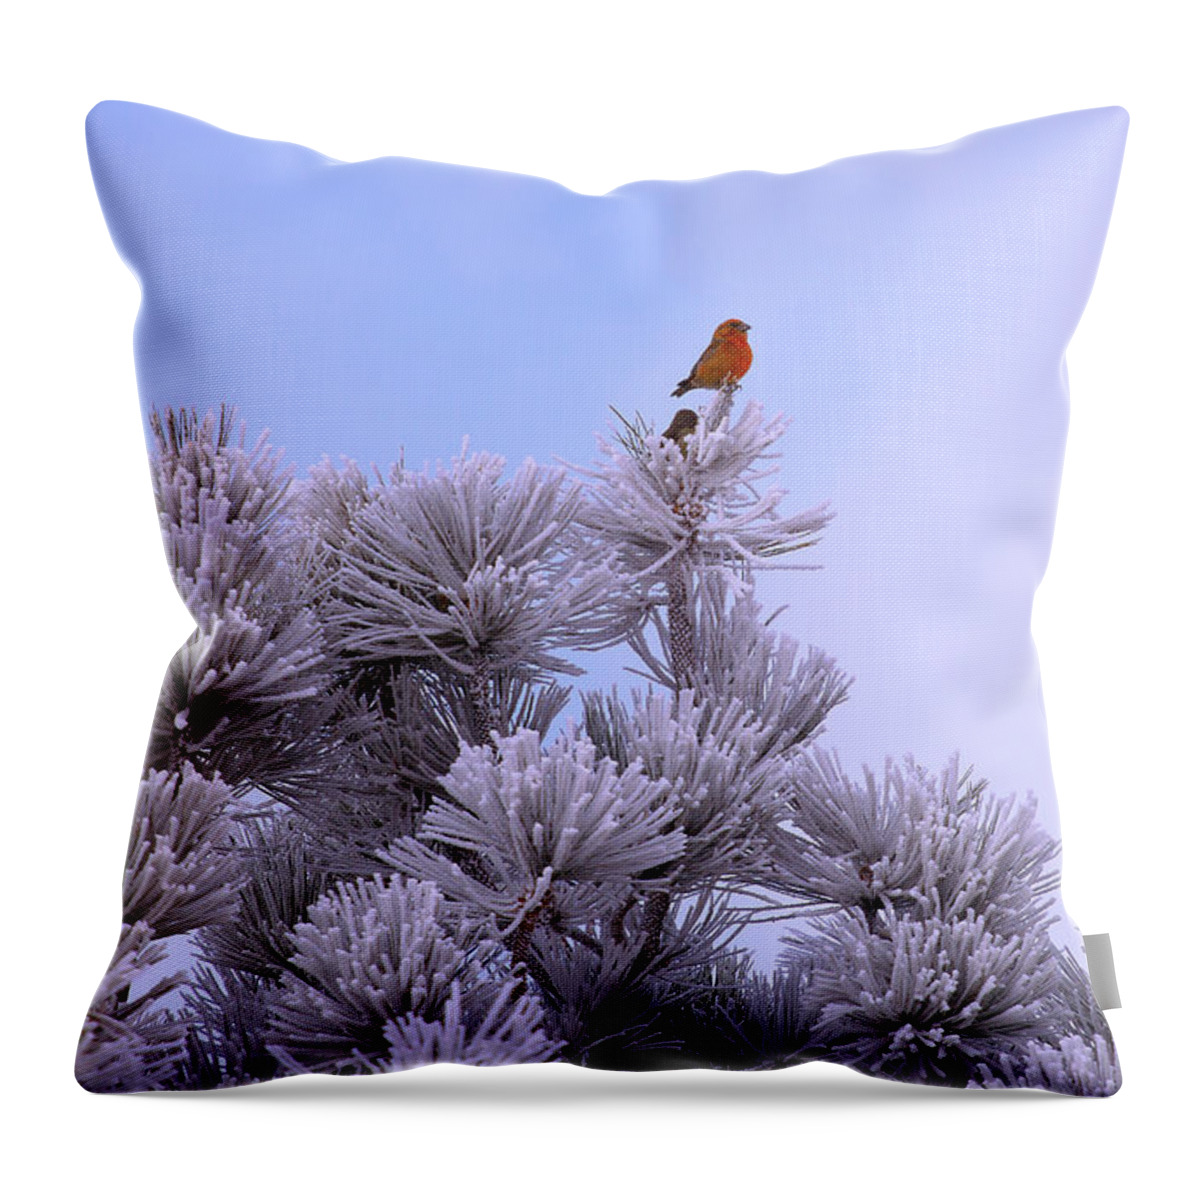 Bird In The Snow Throw Pillow featuring the photograph Snowy Birdy by Kadek Susanto